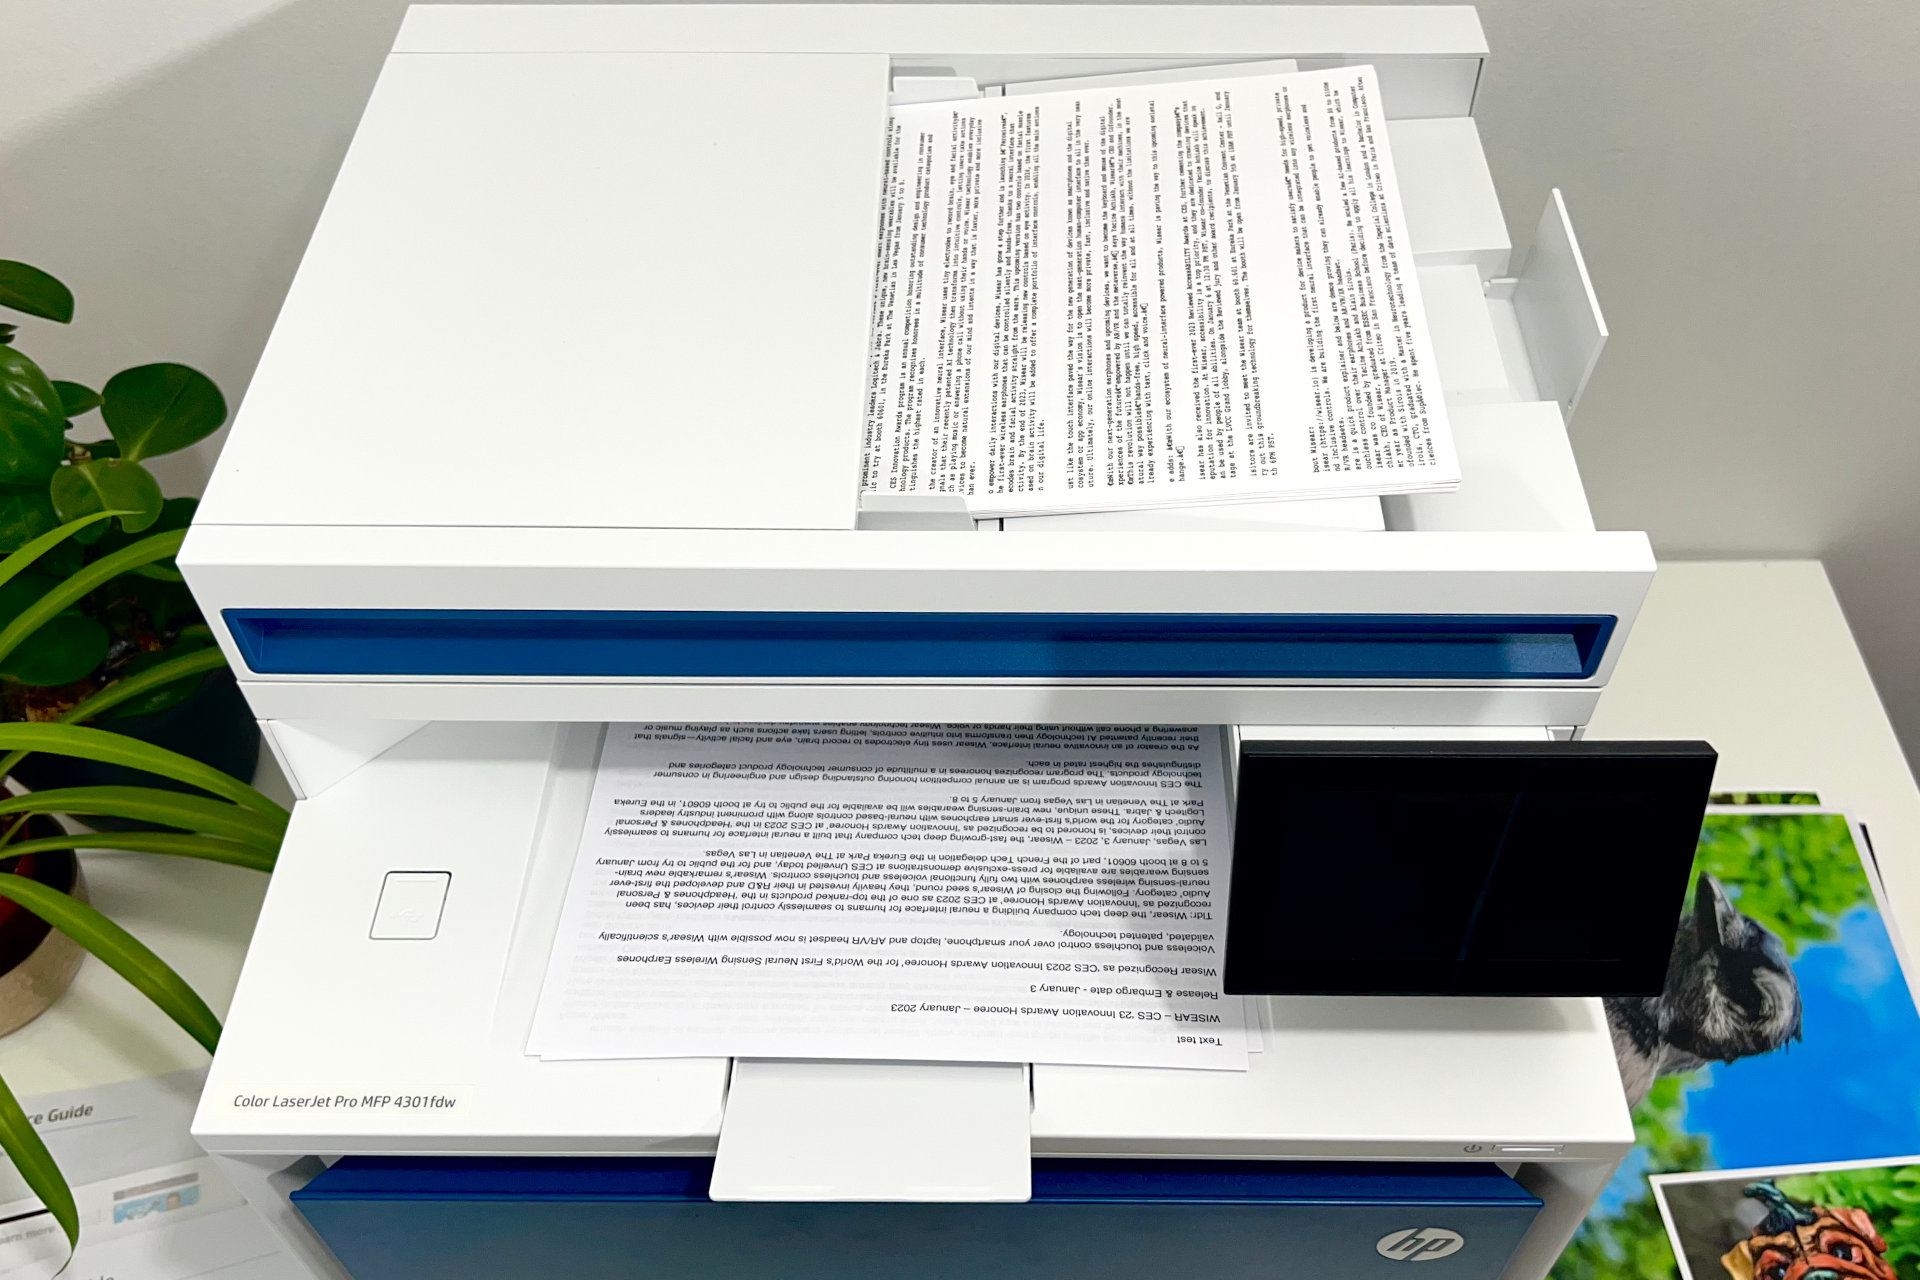 O alimentador de documentos HP na Color LaserJet Pro 4301fdw é rápido e confiável.